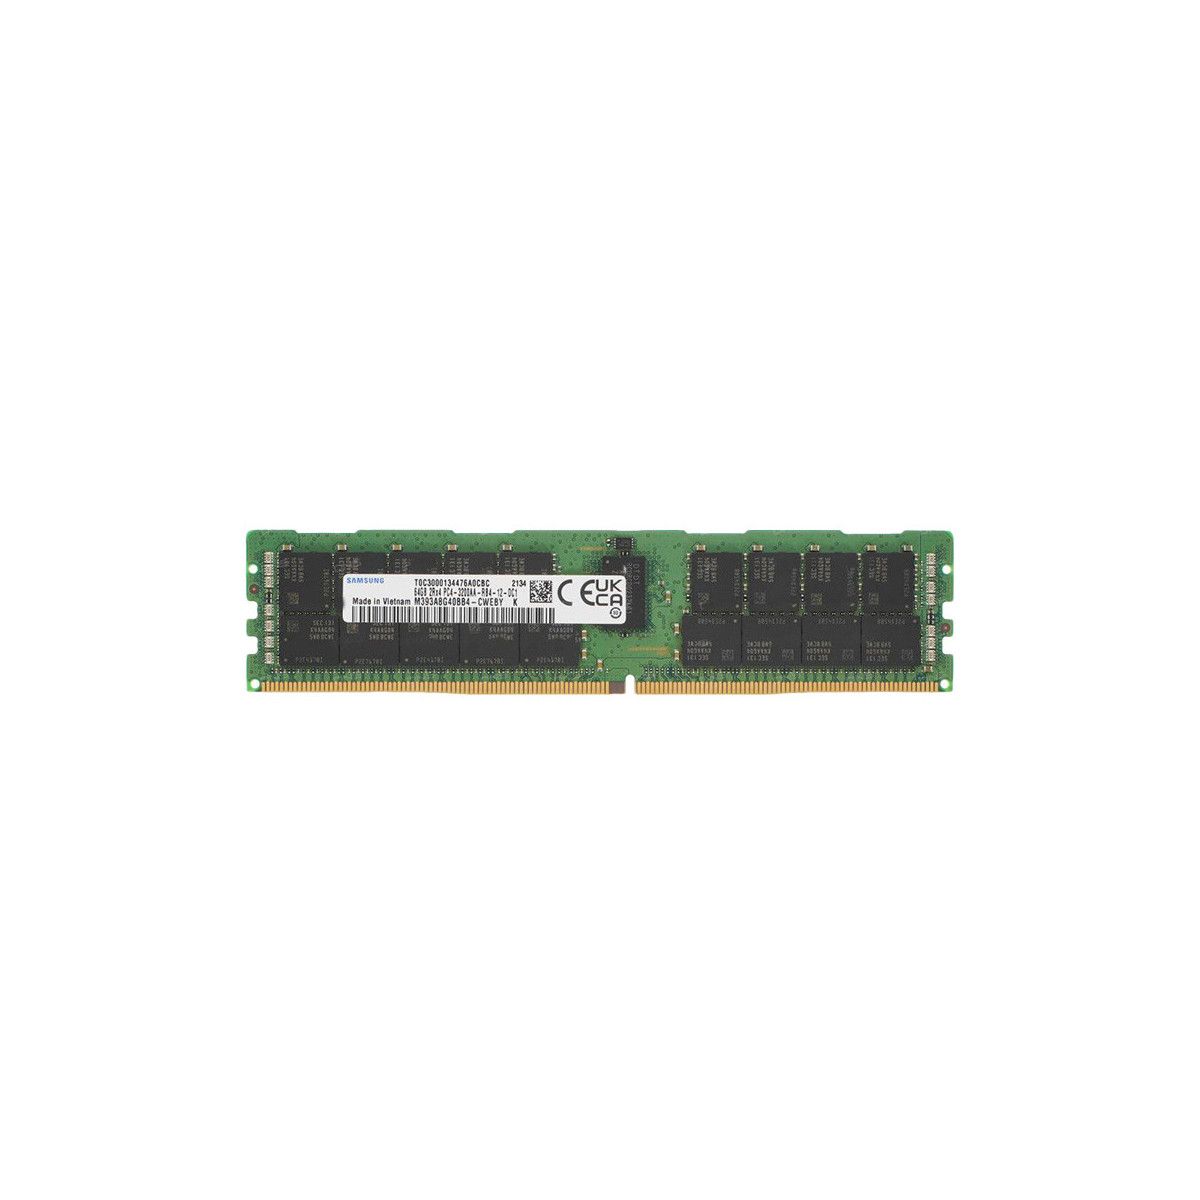 P07650-H21-MS - Memstar 1x 64GB DDR4-3200 RDIMM PC4-25600R - Mem-star Compatible OEM Memory 1 - Memstar 